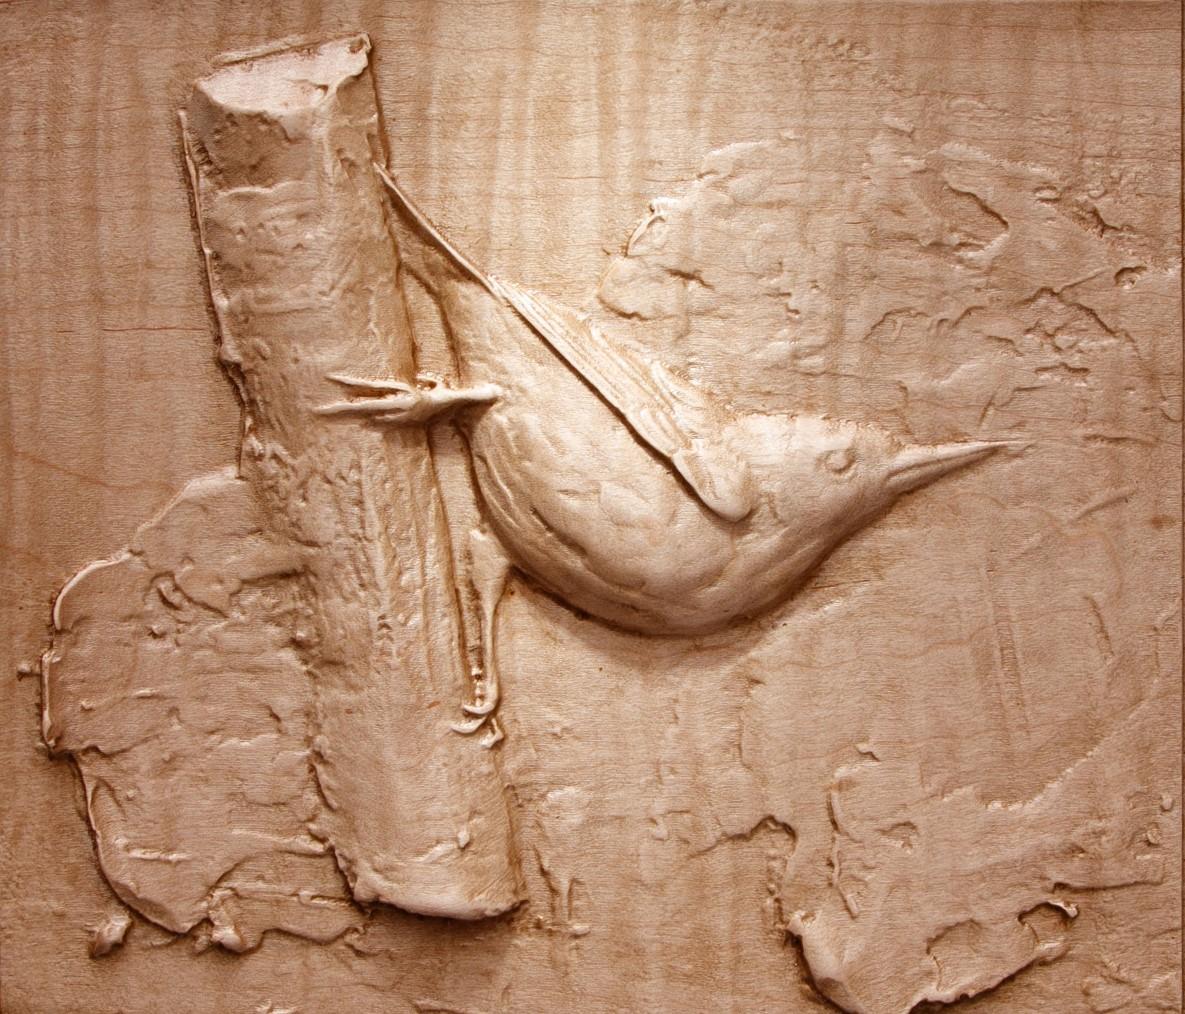 Dana Younger Figurative Sculpture - "Nuthatch" Bas-relief Sculpture